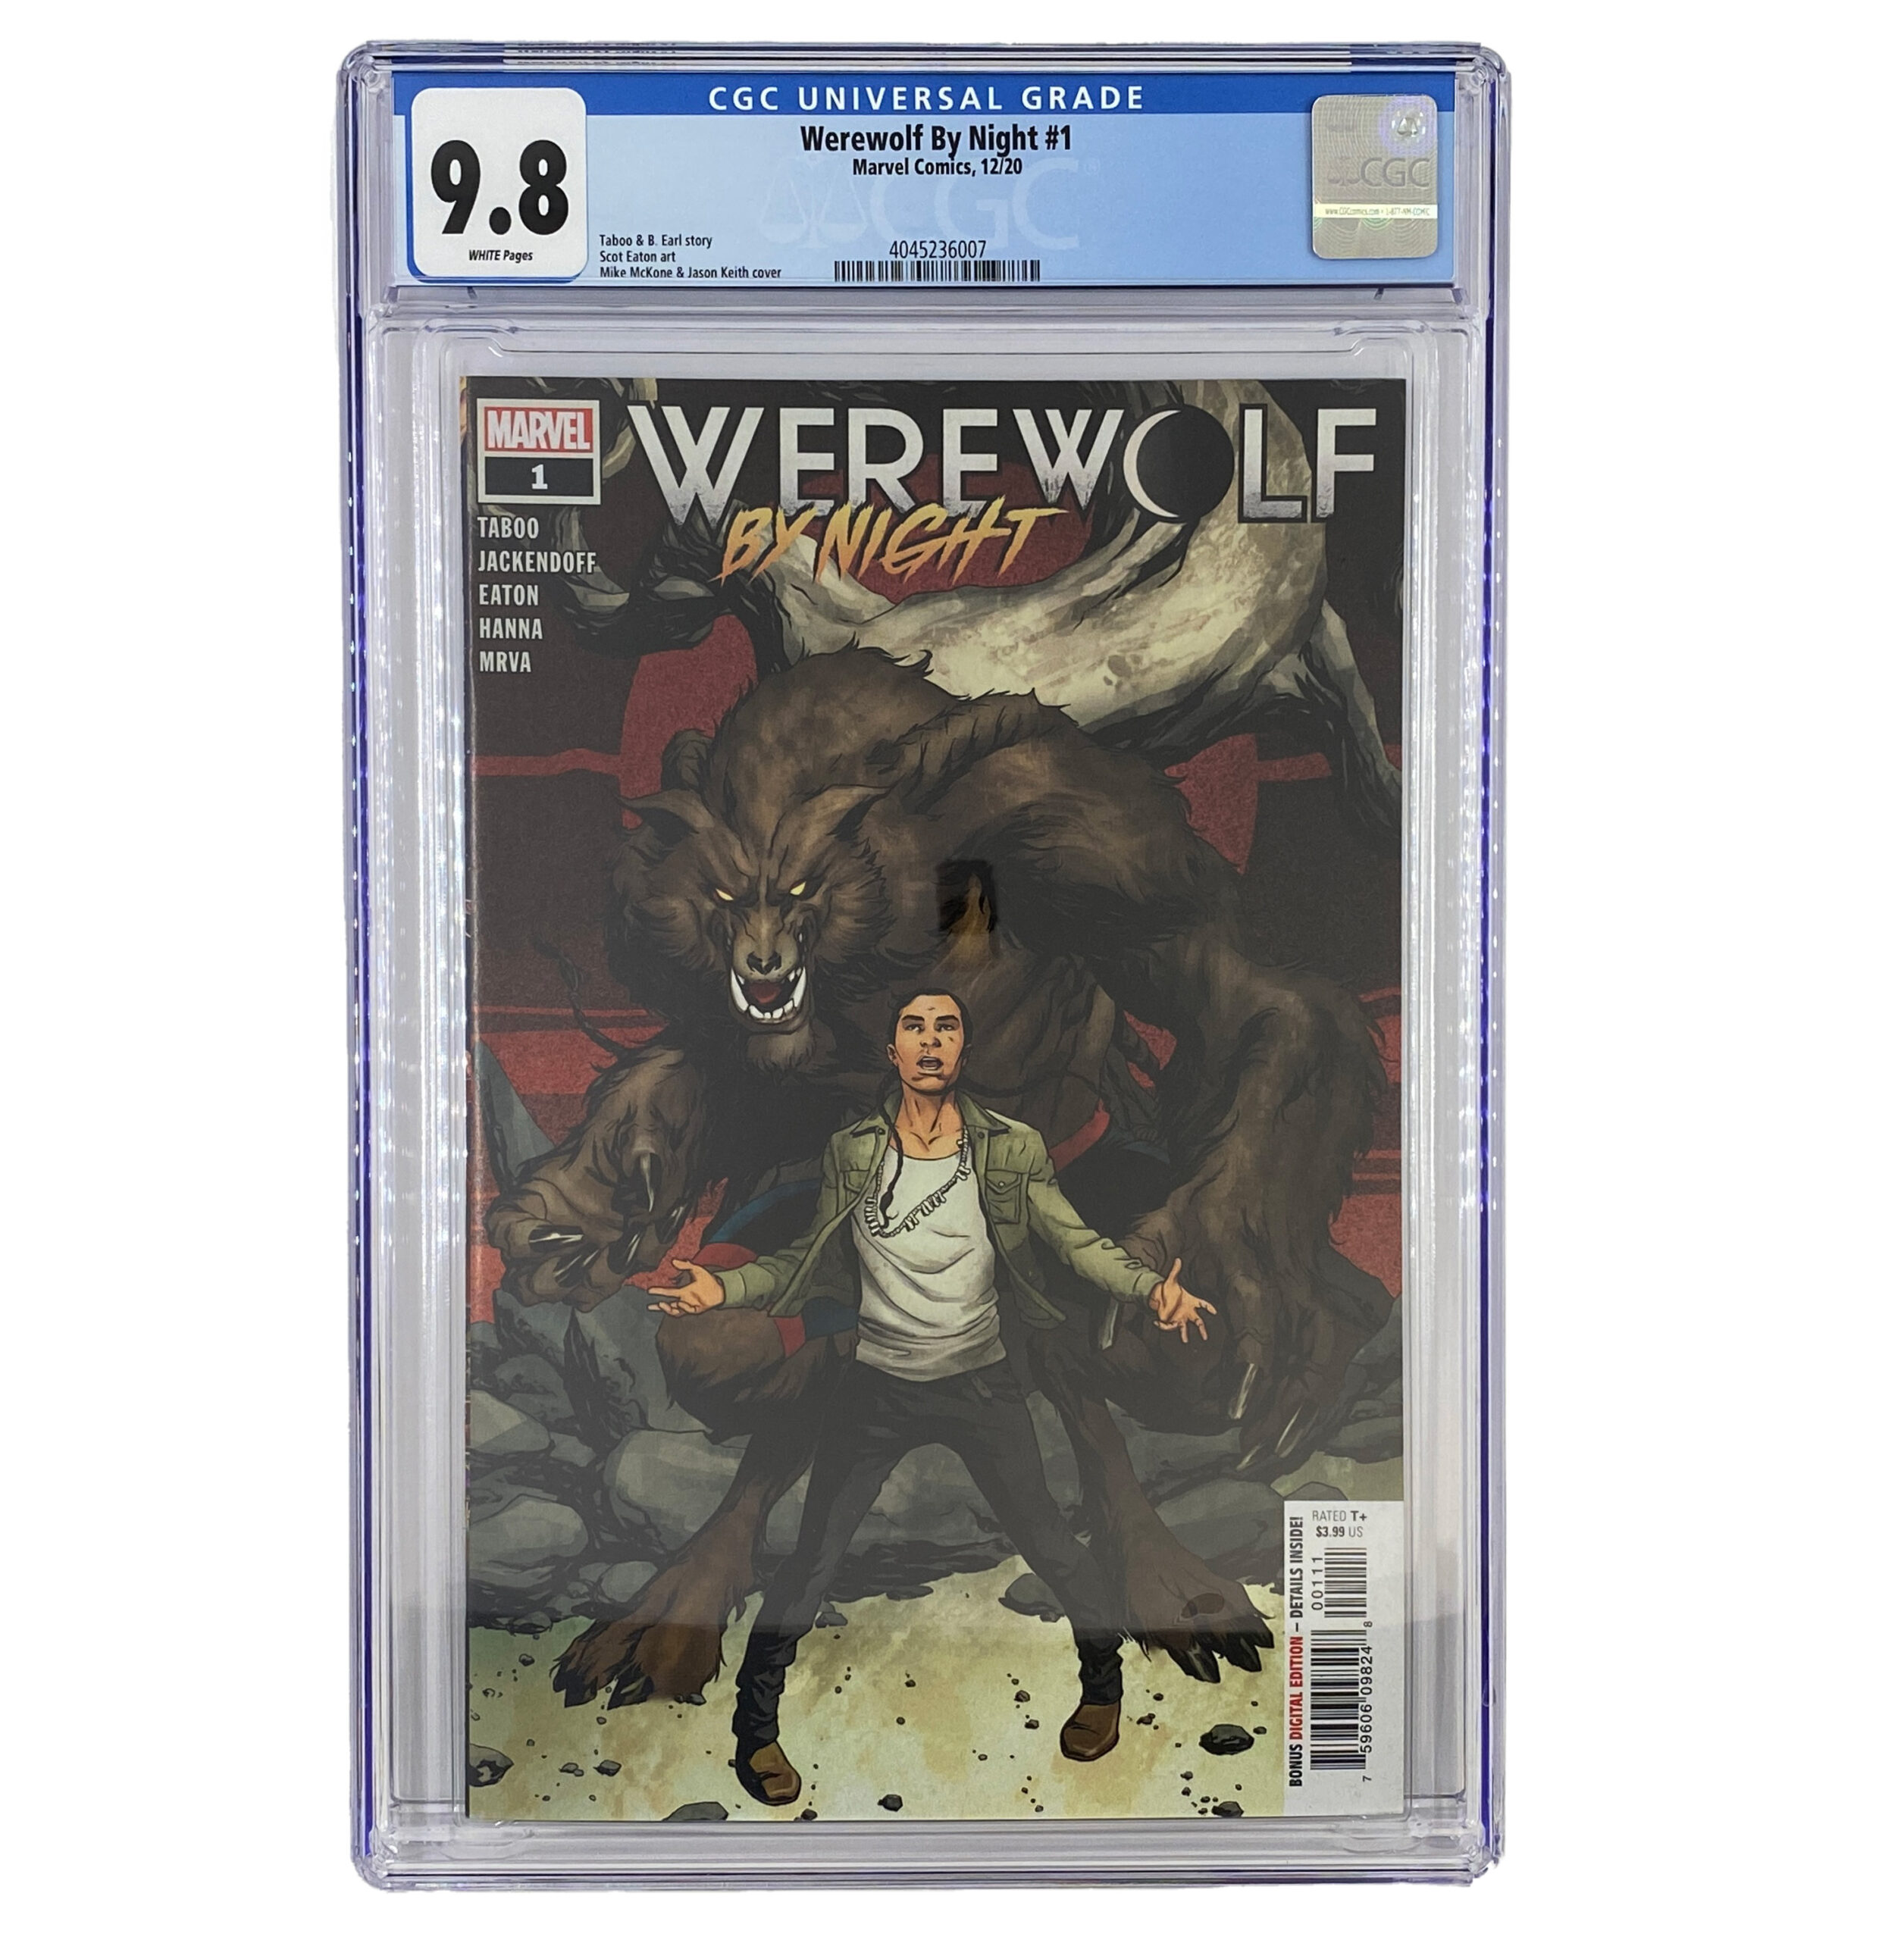 Werewolf By Night #1 Reviews